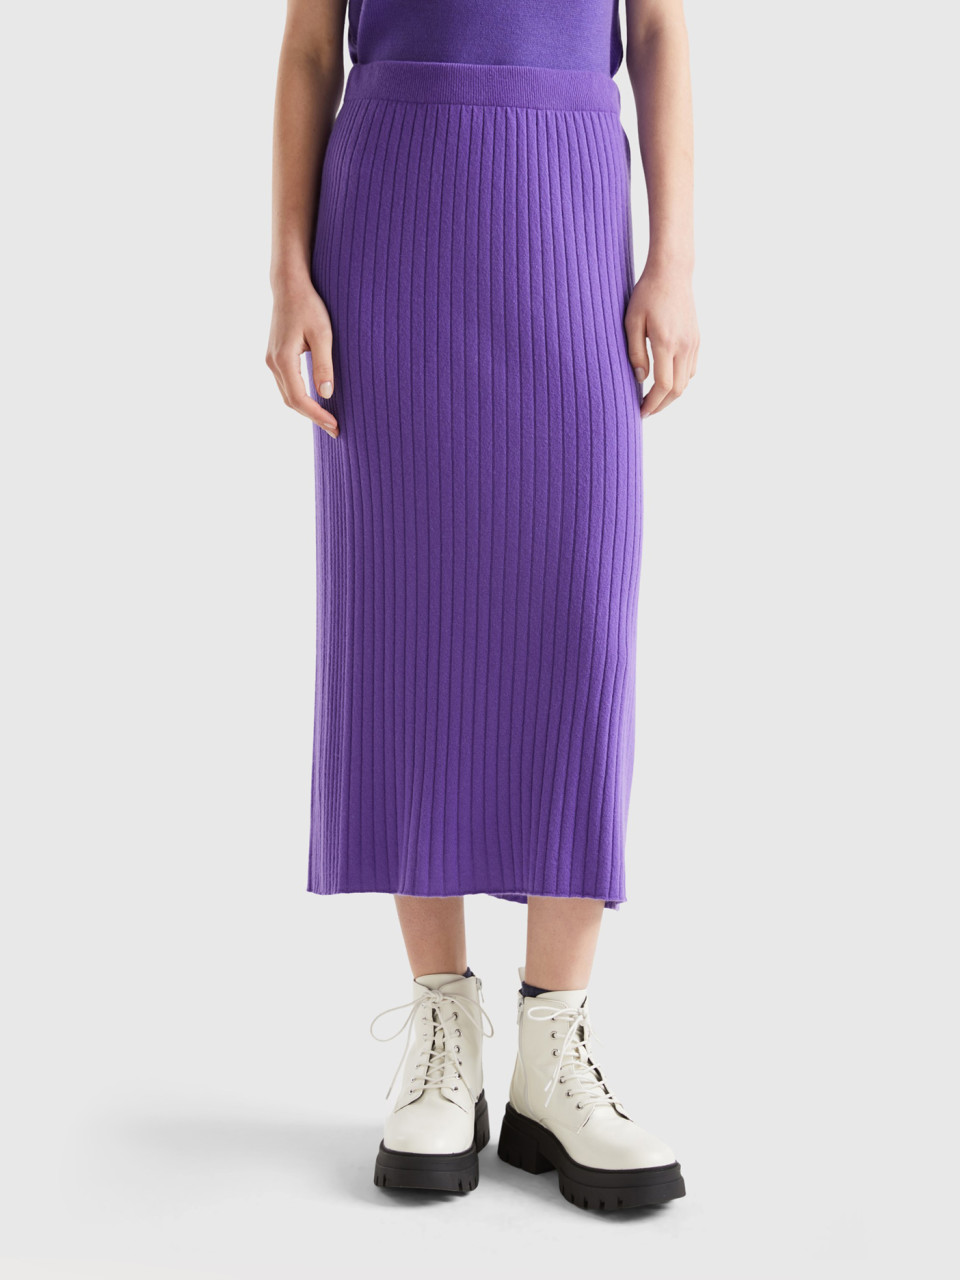 Benetton, Knit Pencil Skirt, Violet, Women